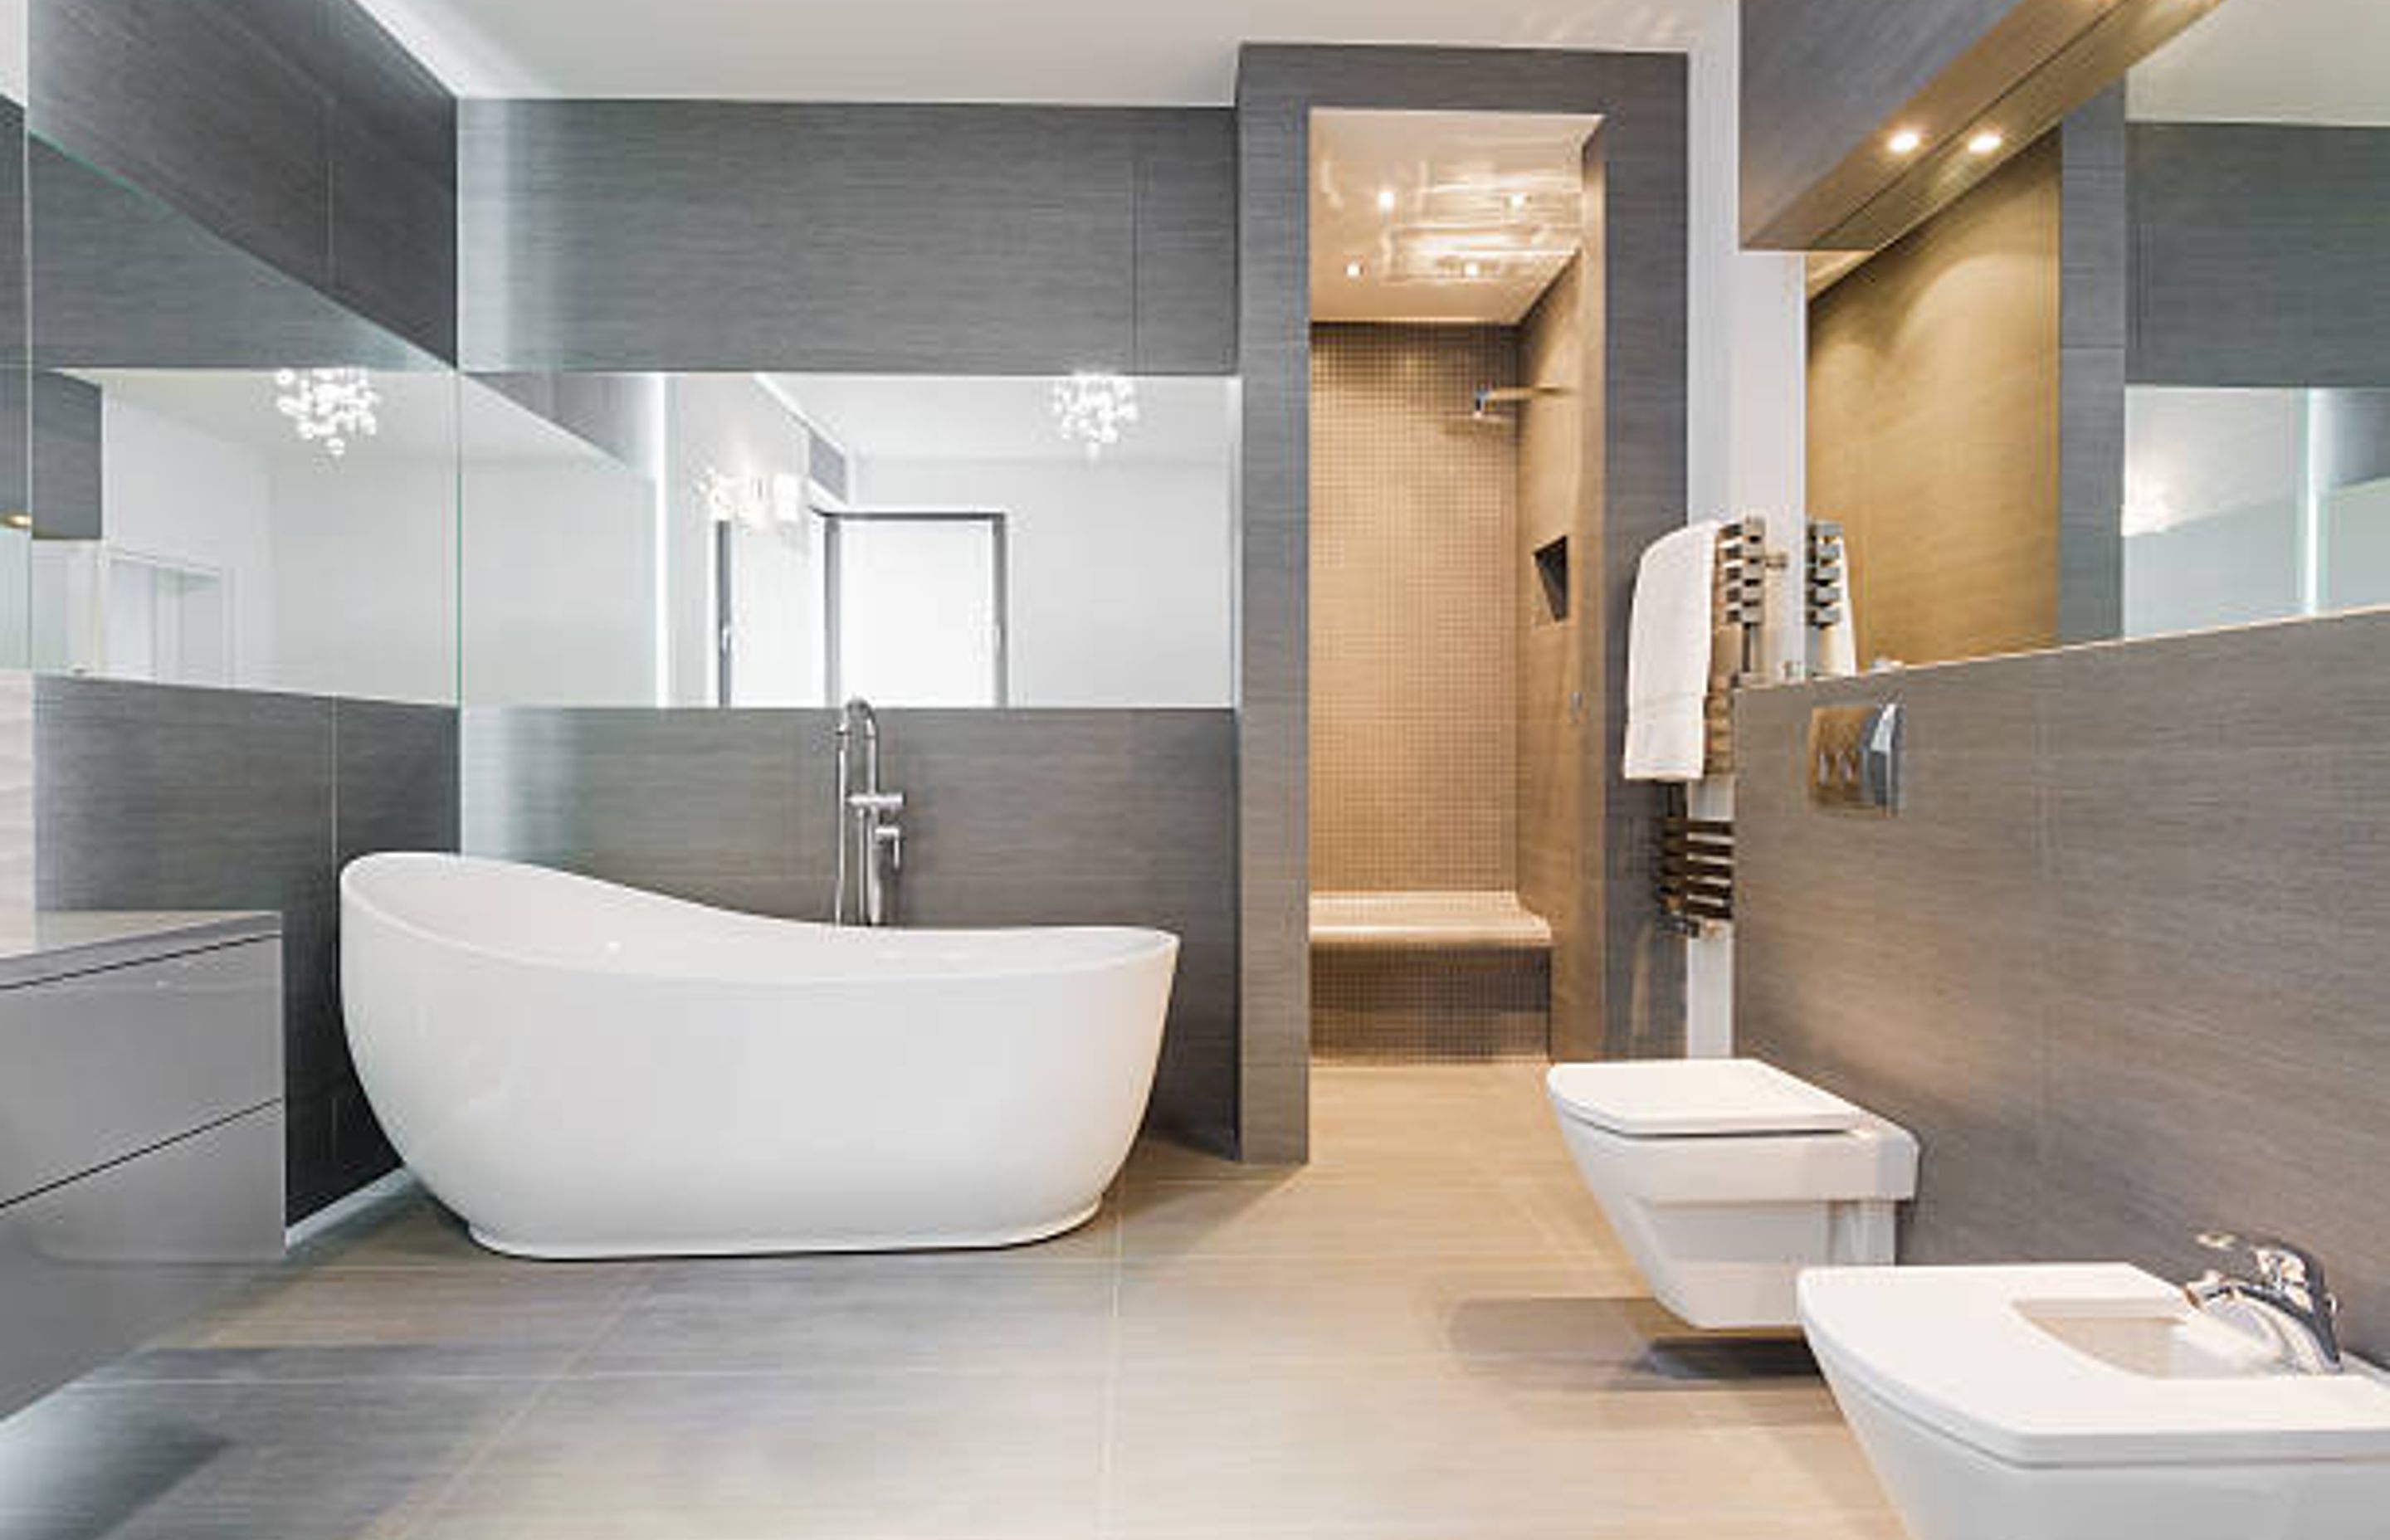 Example of a smart bathroom design | Photo Credit – iStock